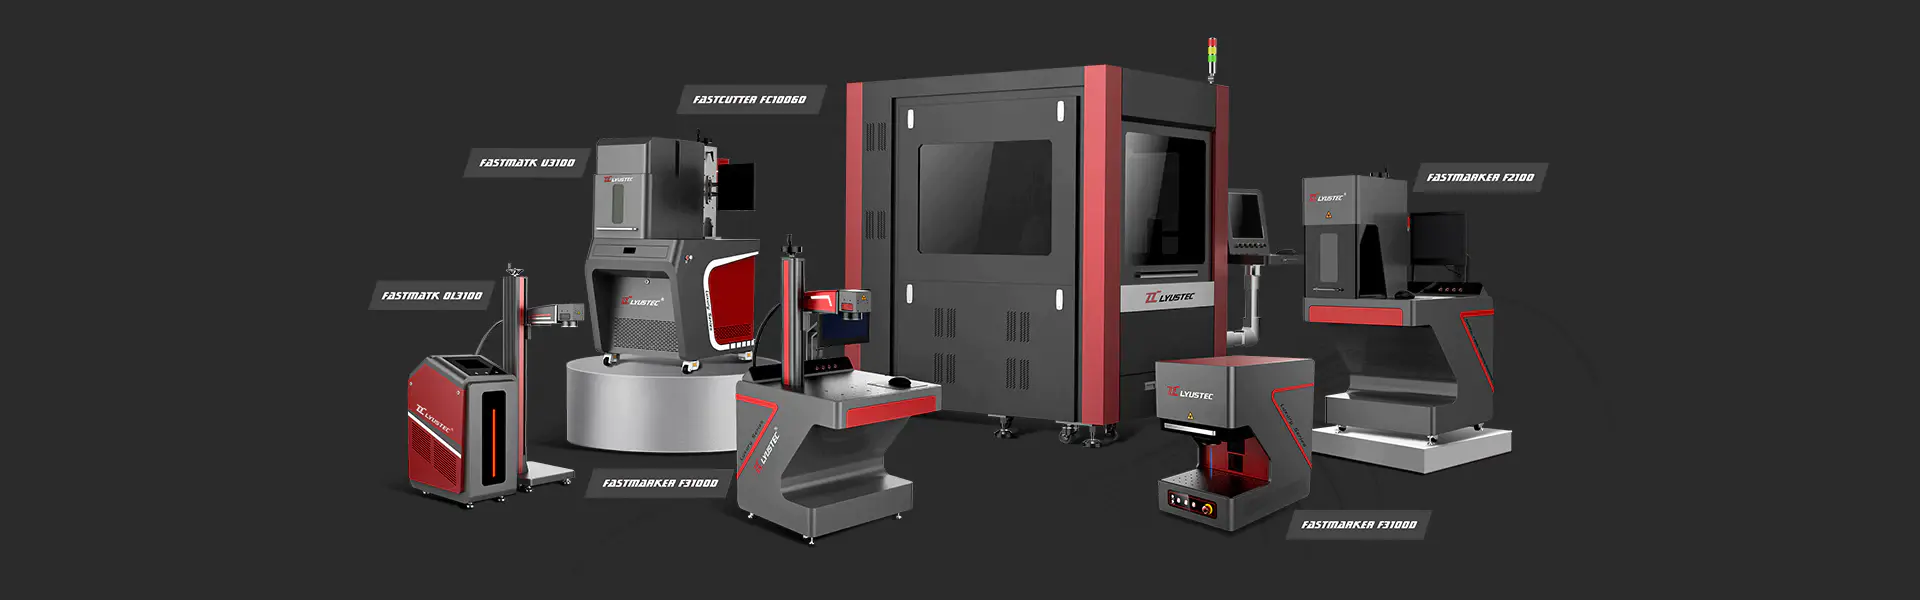 Laser Cutting Machine,Laser Engraving Machine,Fiber Laser Marking Machine Manufacturers